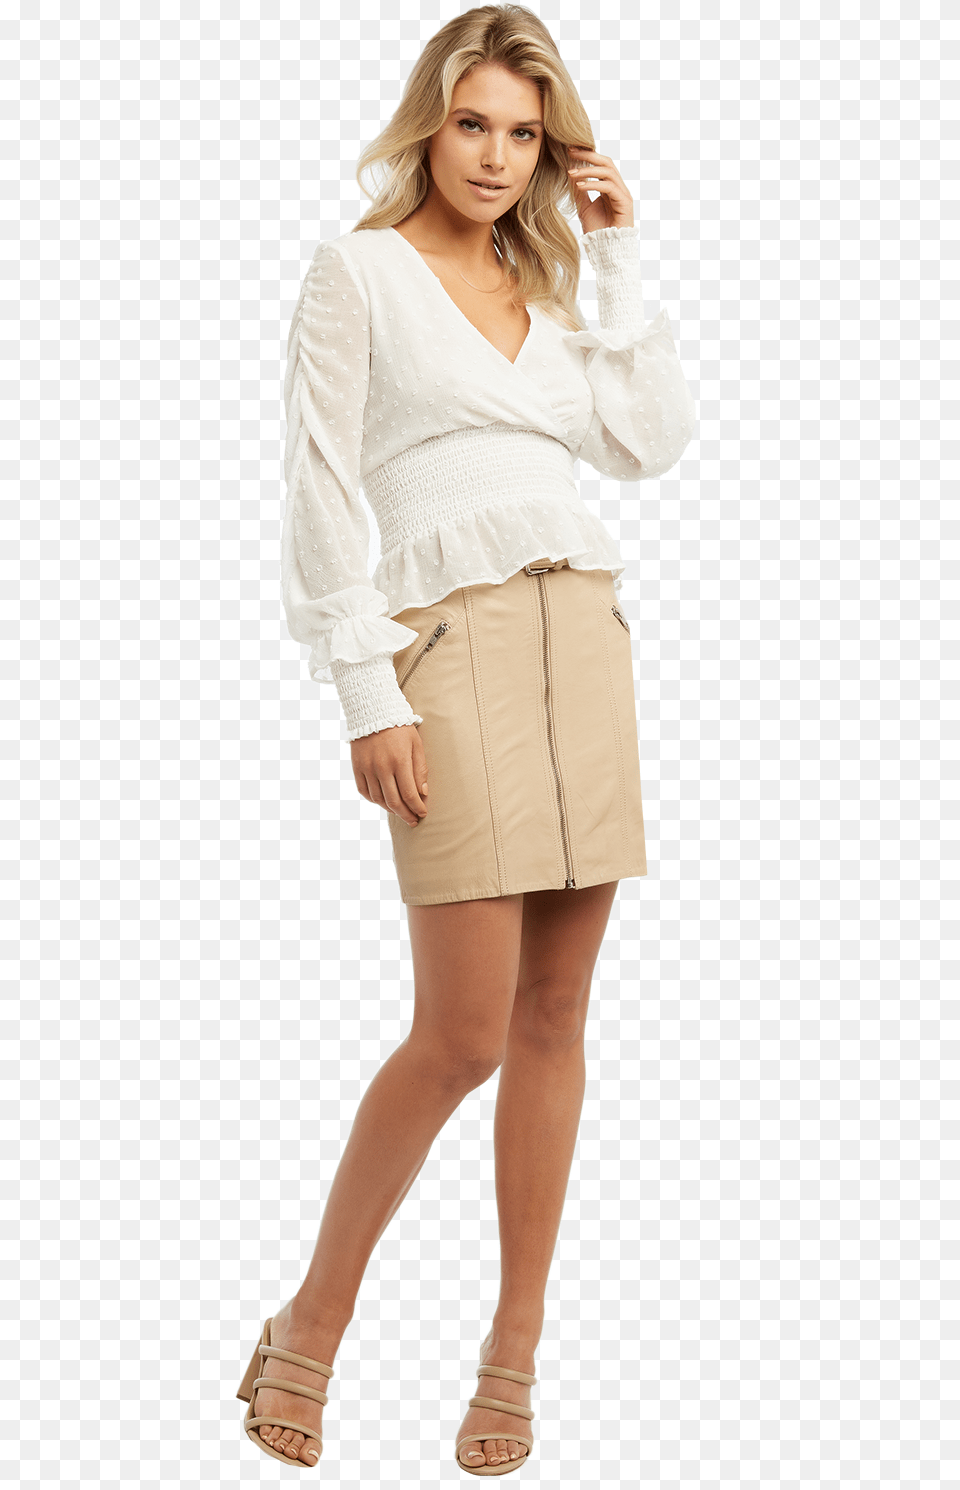 Tianna Dobby Blouse In Colour Cloud Dancer Miniskirt, Clothing, Skirt, Adult, Female Png Image